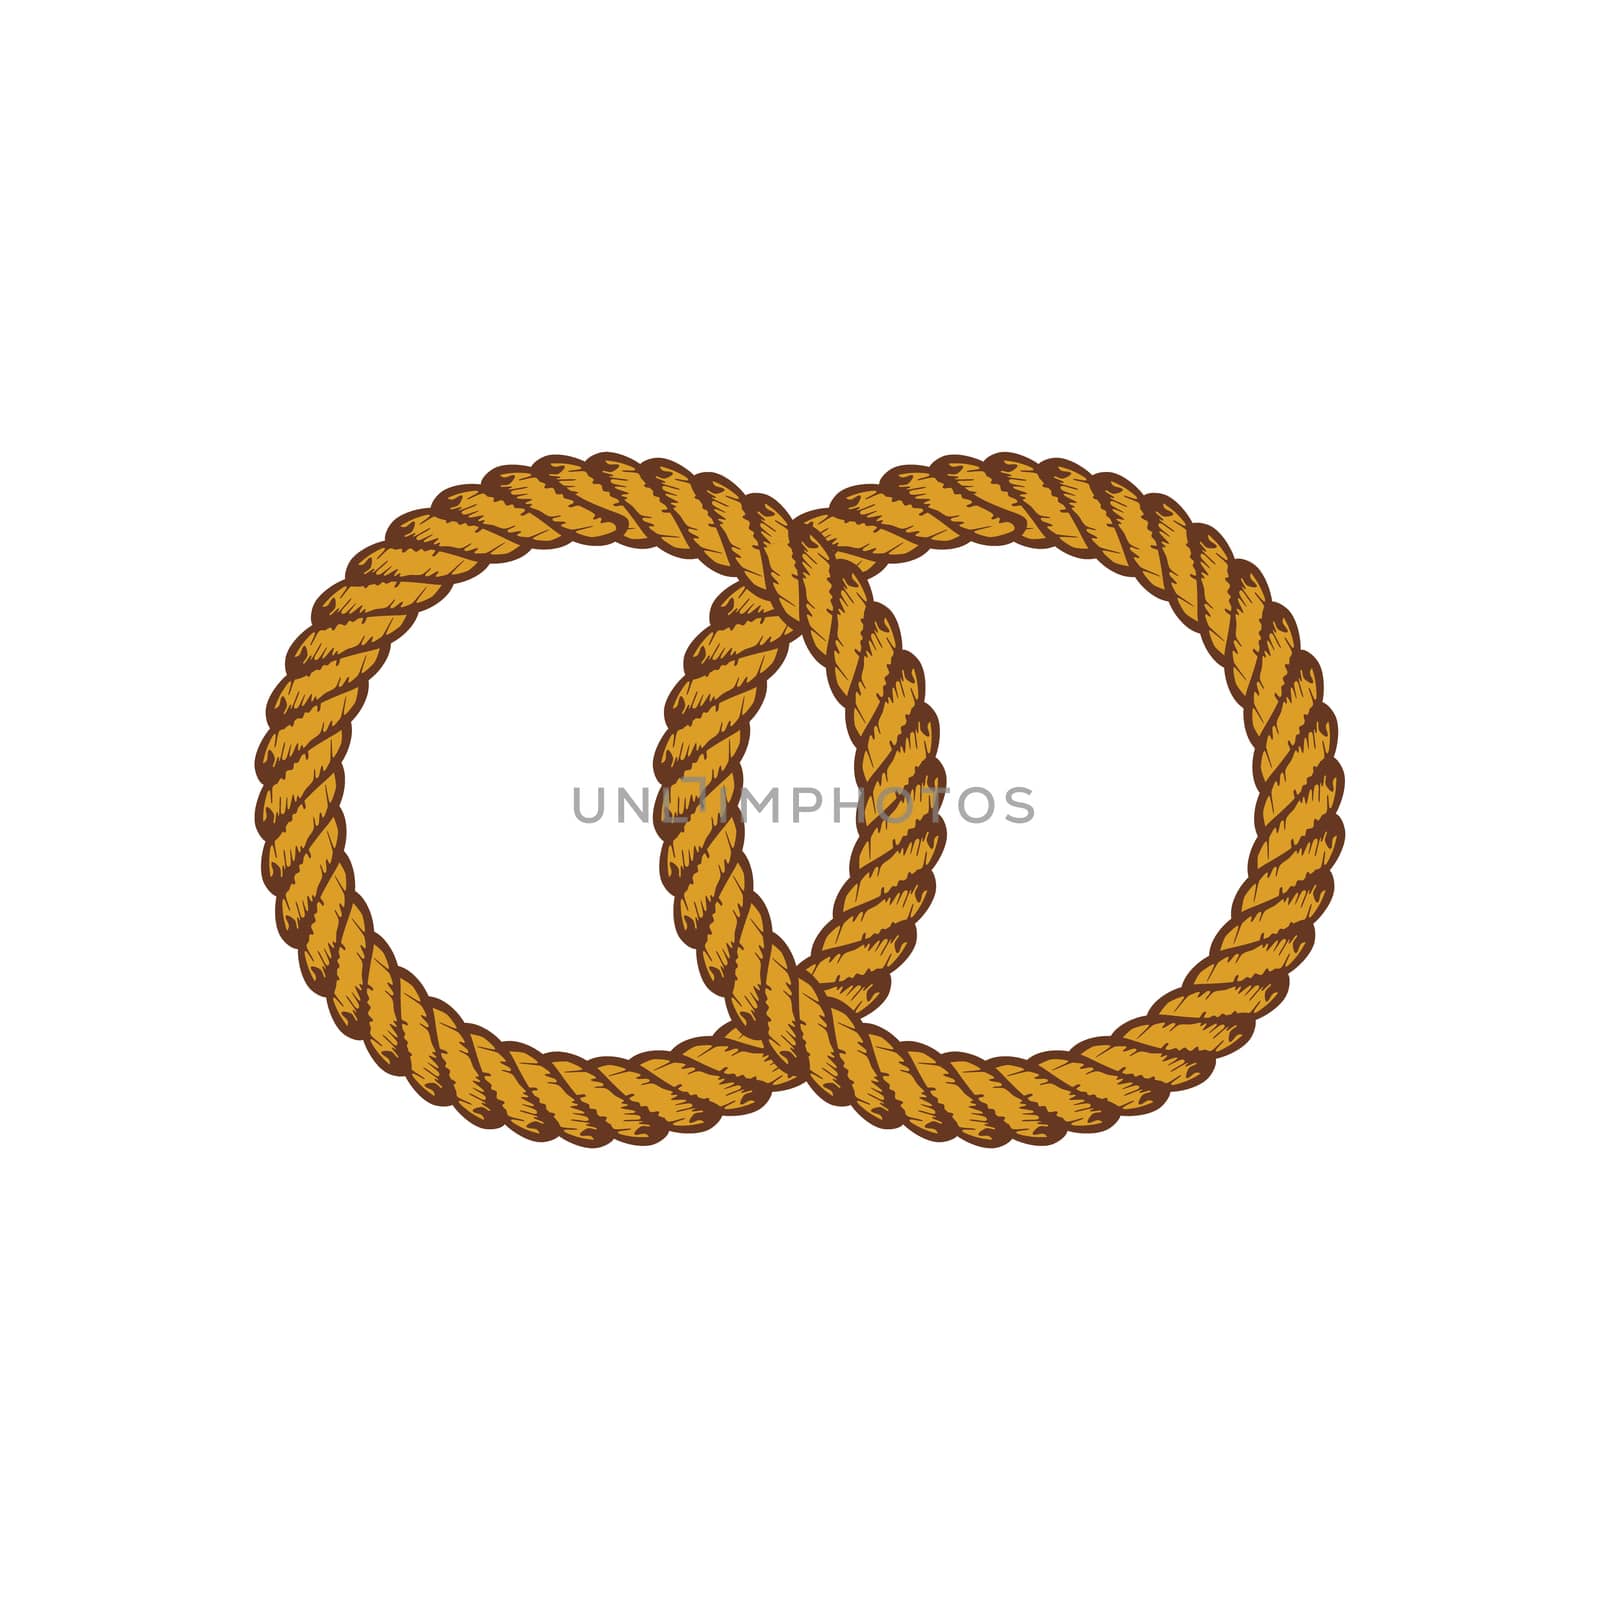 vintage brown rope theme vector art illustration